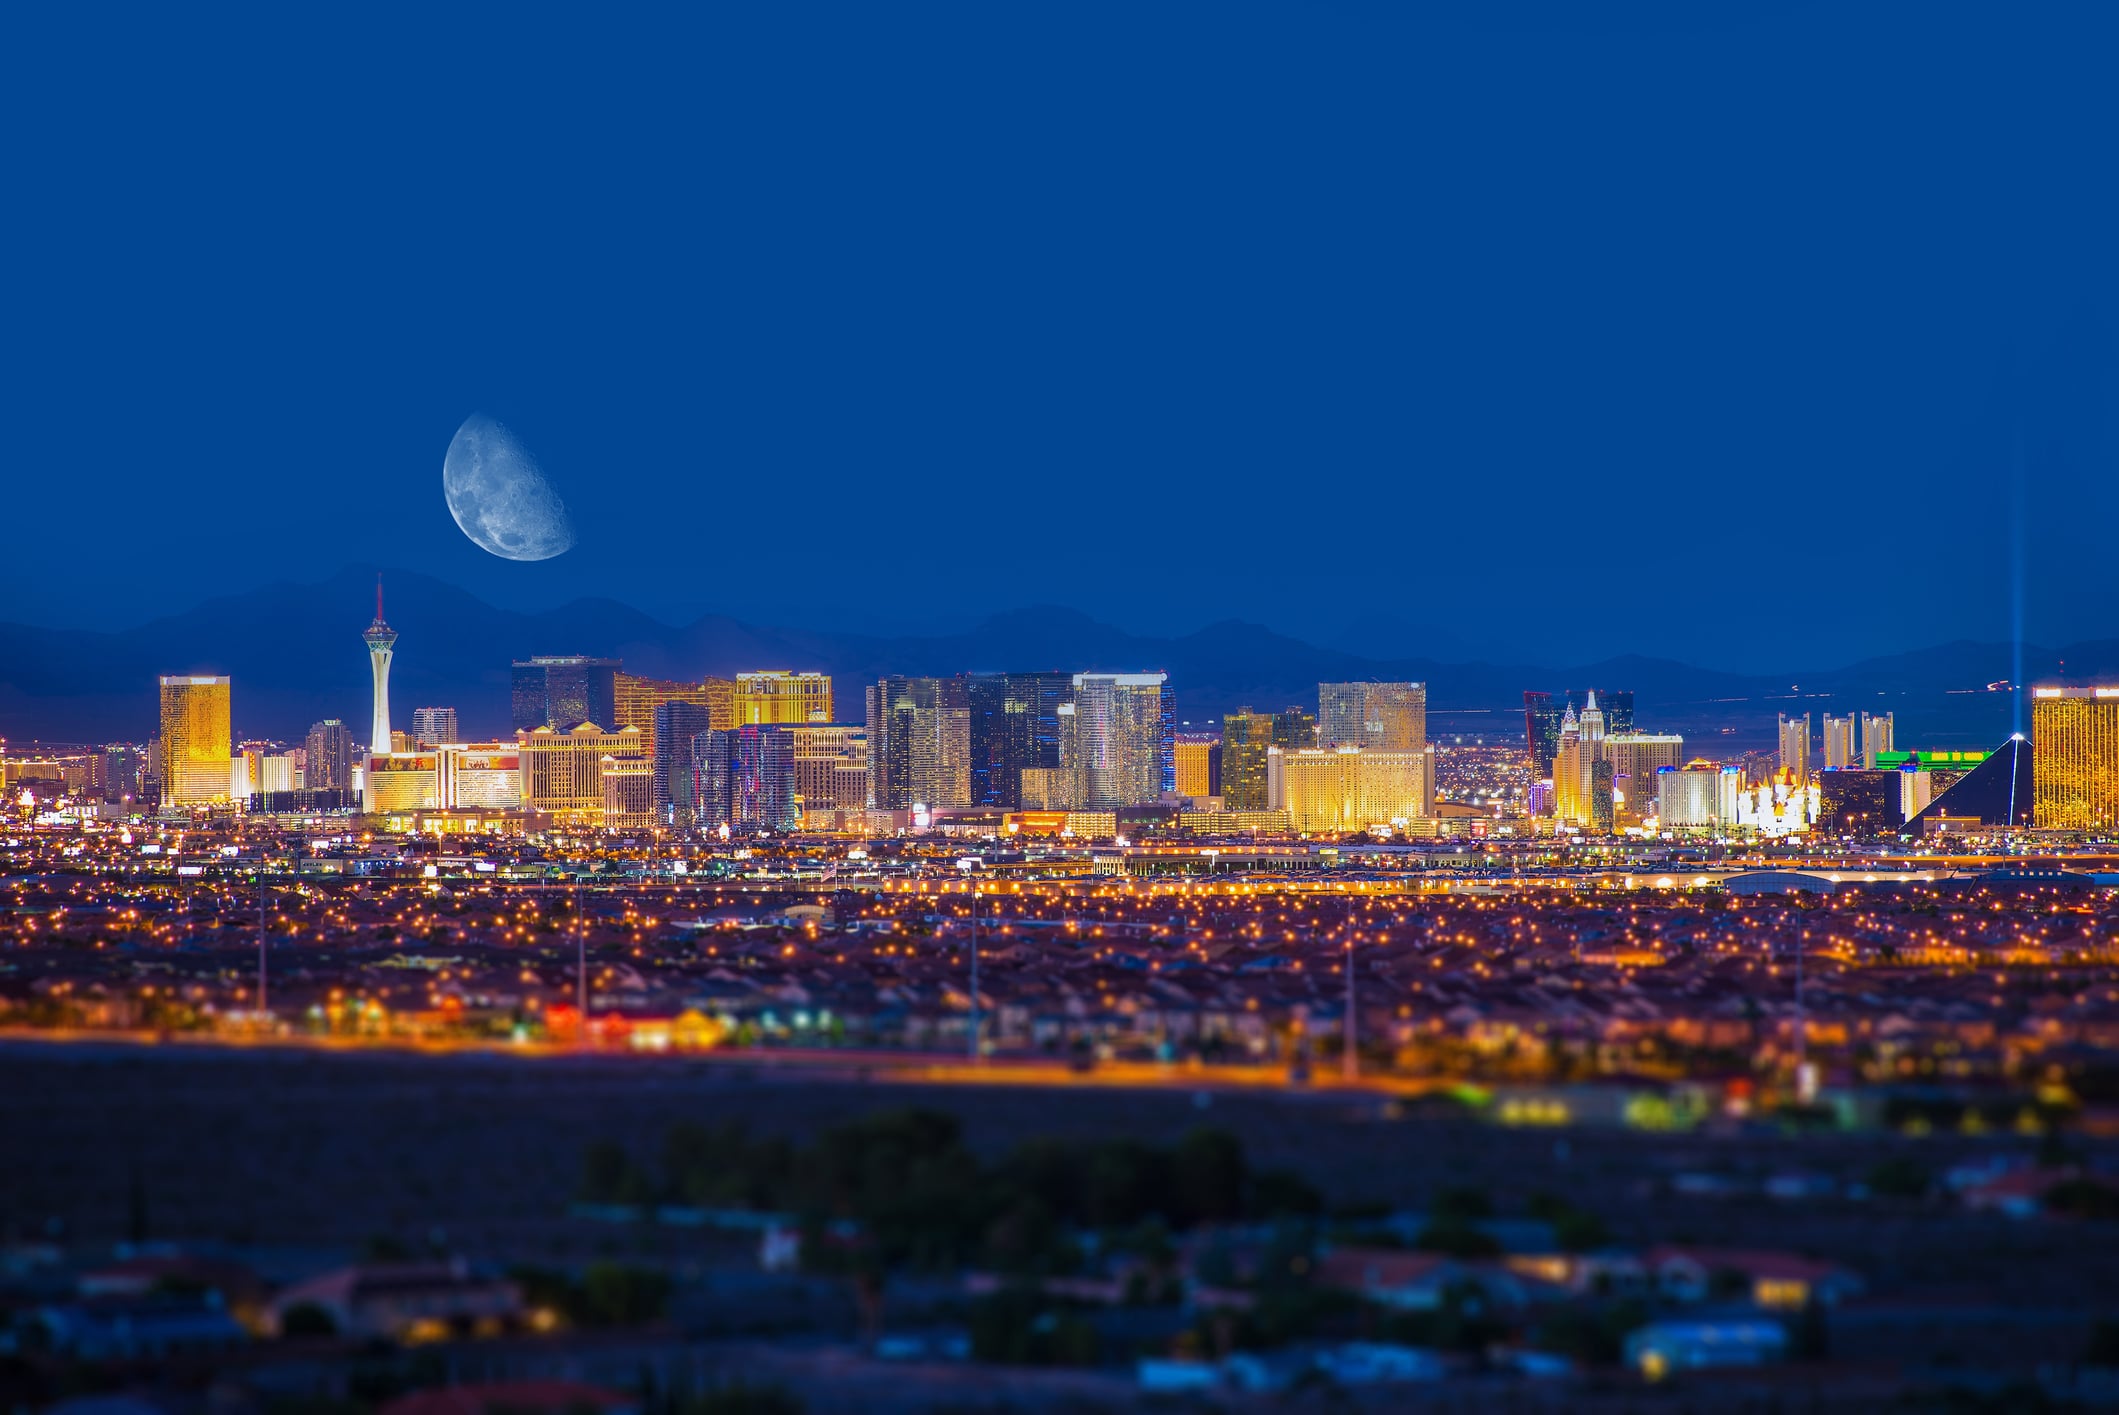 Moon hangs low over brightly lit Vegas skyline.